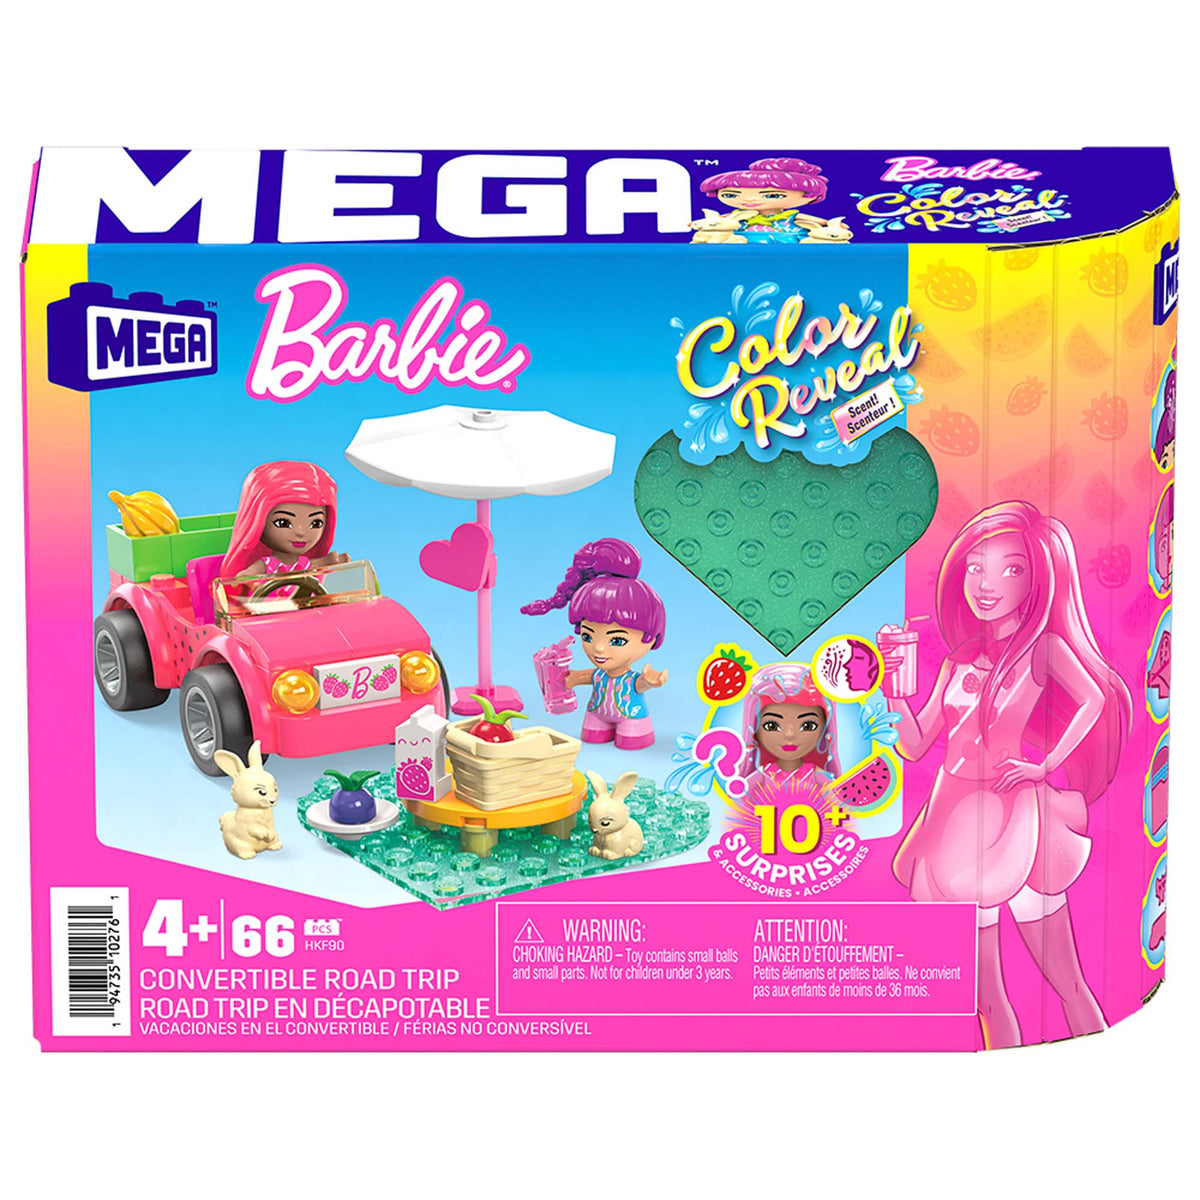 JOUET K.I.D. INC. Toys & Games Mega Barbie Color Reveal Convertible Road Trip , 1 Count